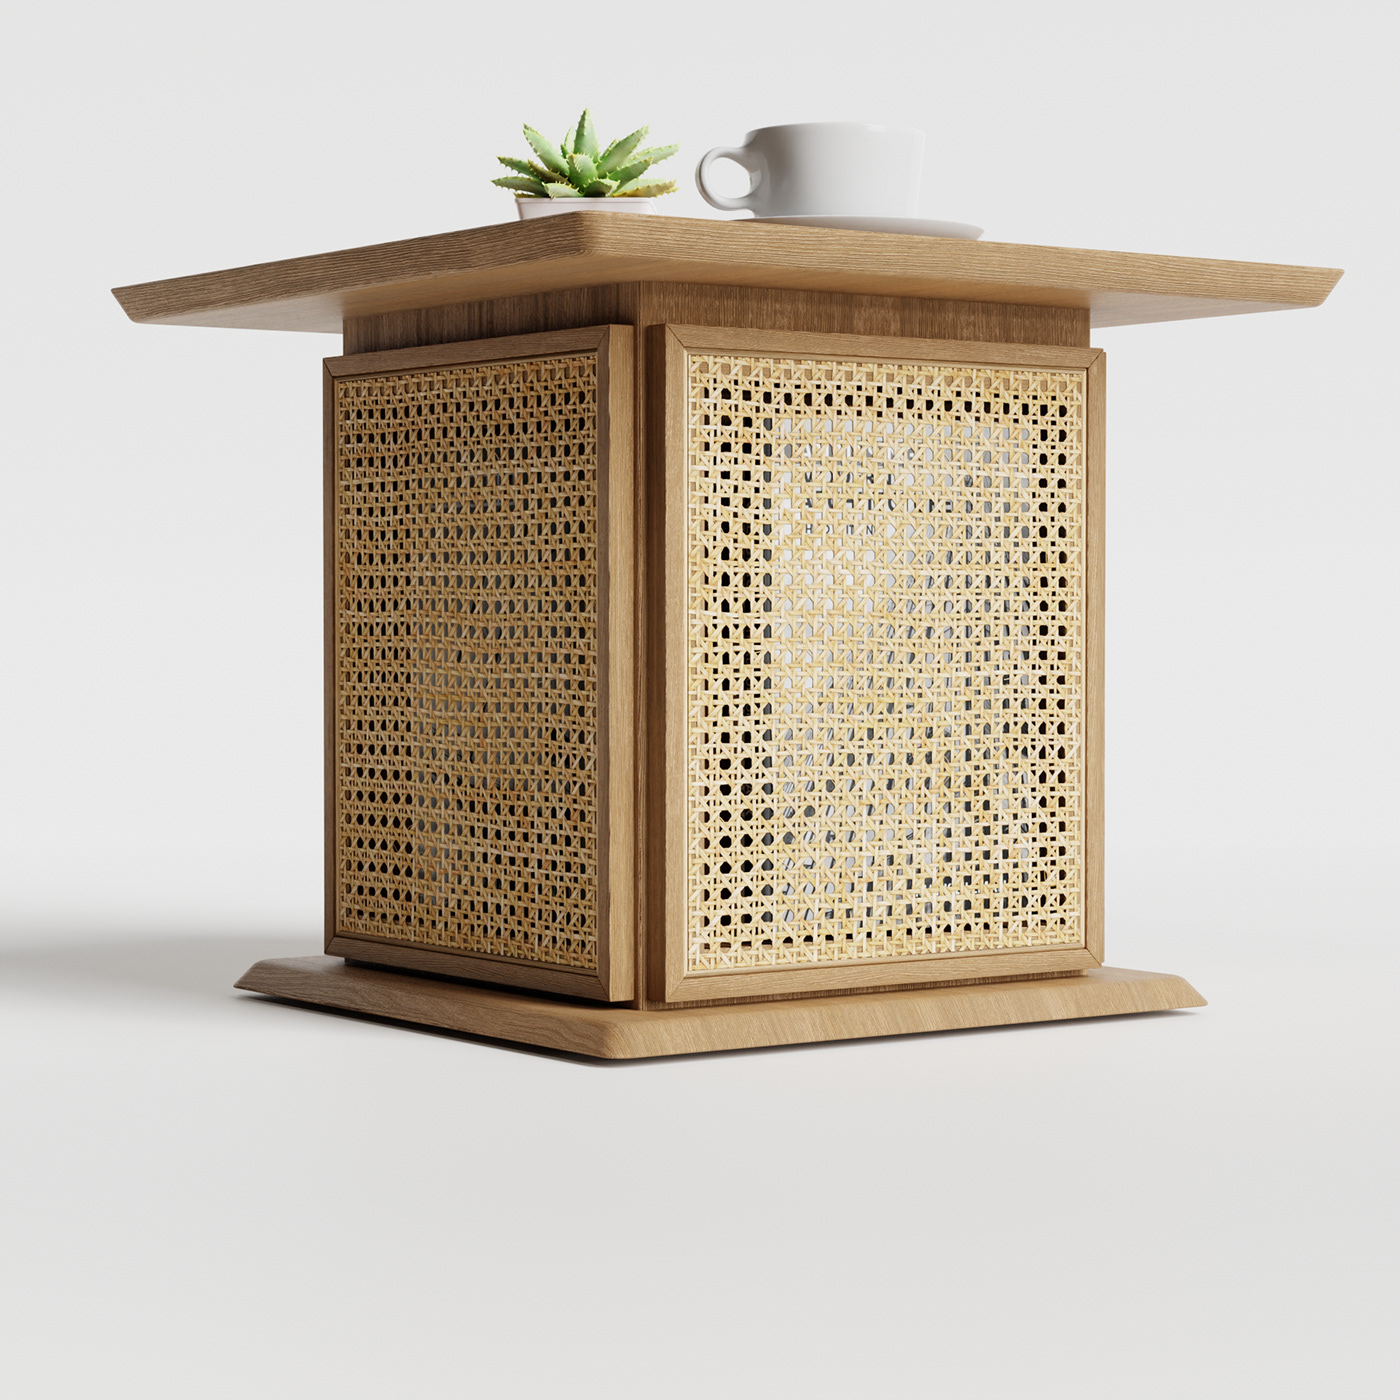 Cane coffee table design furniture furniture design  interior design  minimal product design  wood